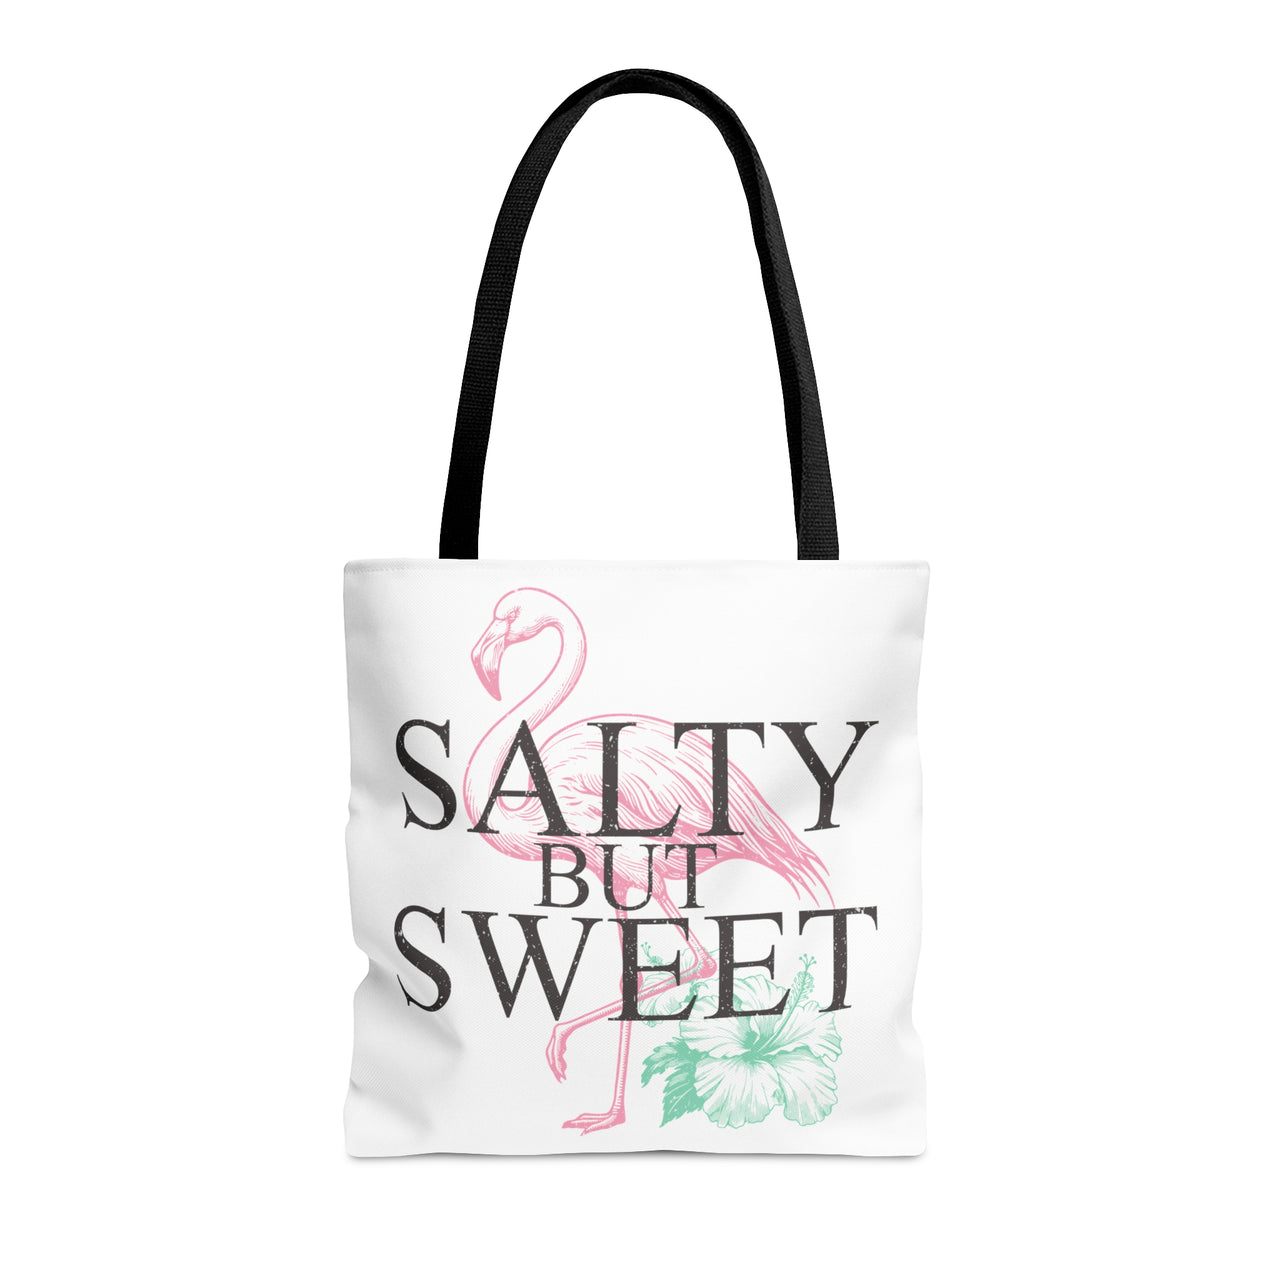 Salty but sweet Tote Bag